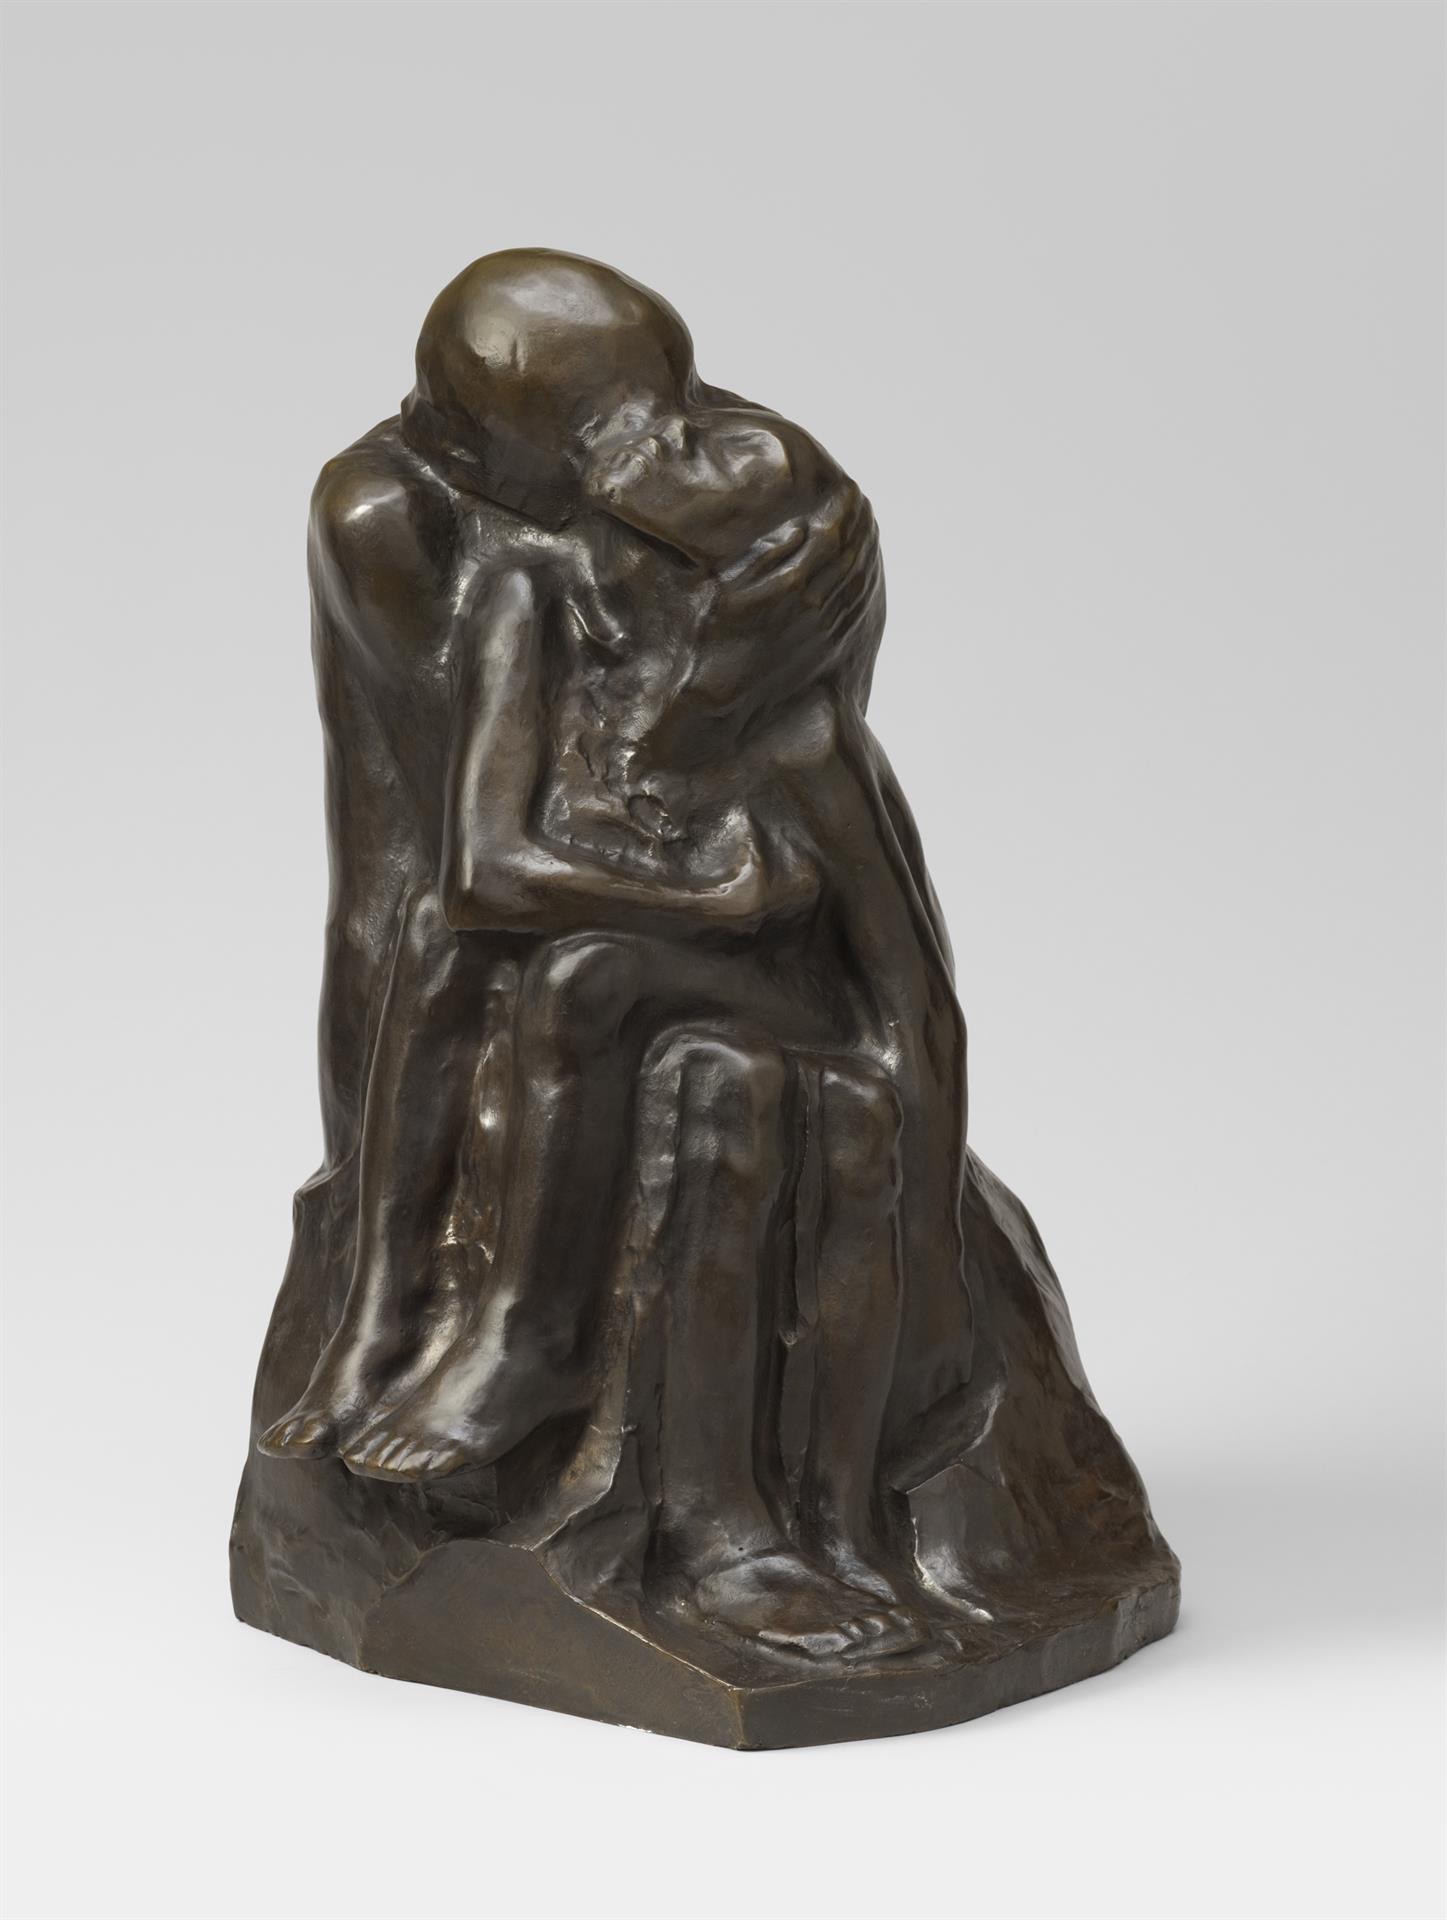 Käthe Kollwitz, Couple amoureux, 1913-15, bronze, Seeler 13.II.B.9., Collection Kollwitz de Cologne © Käthe Kollwitz Museum Köln